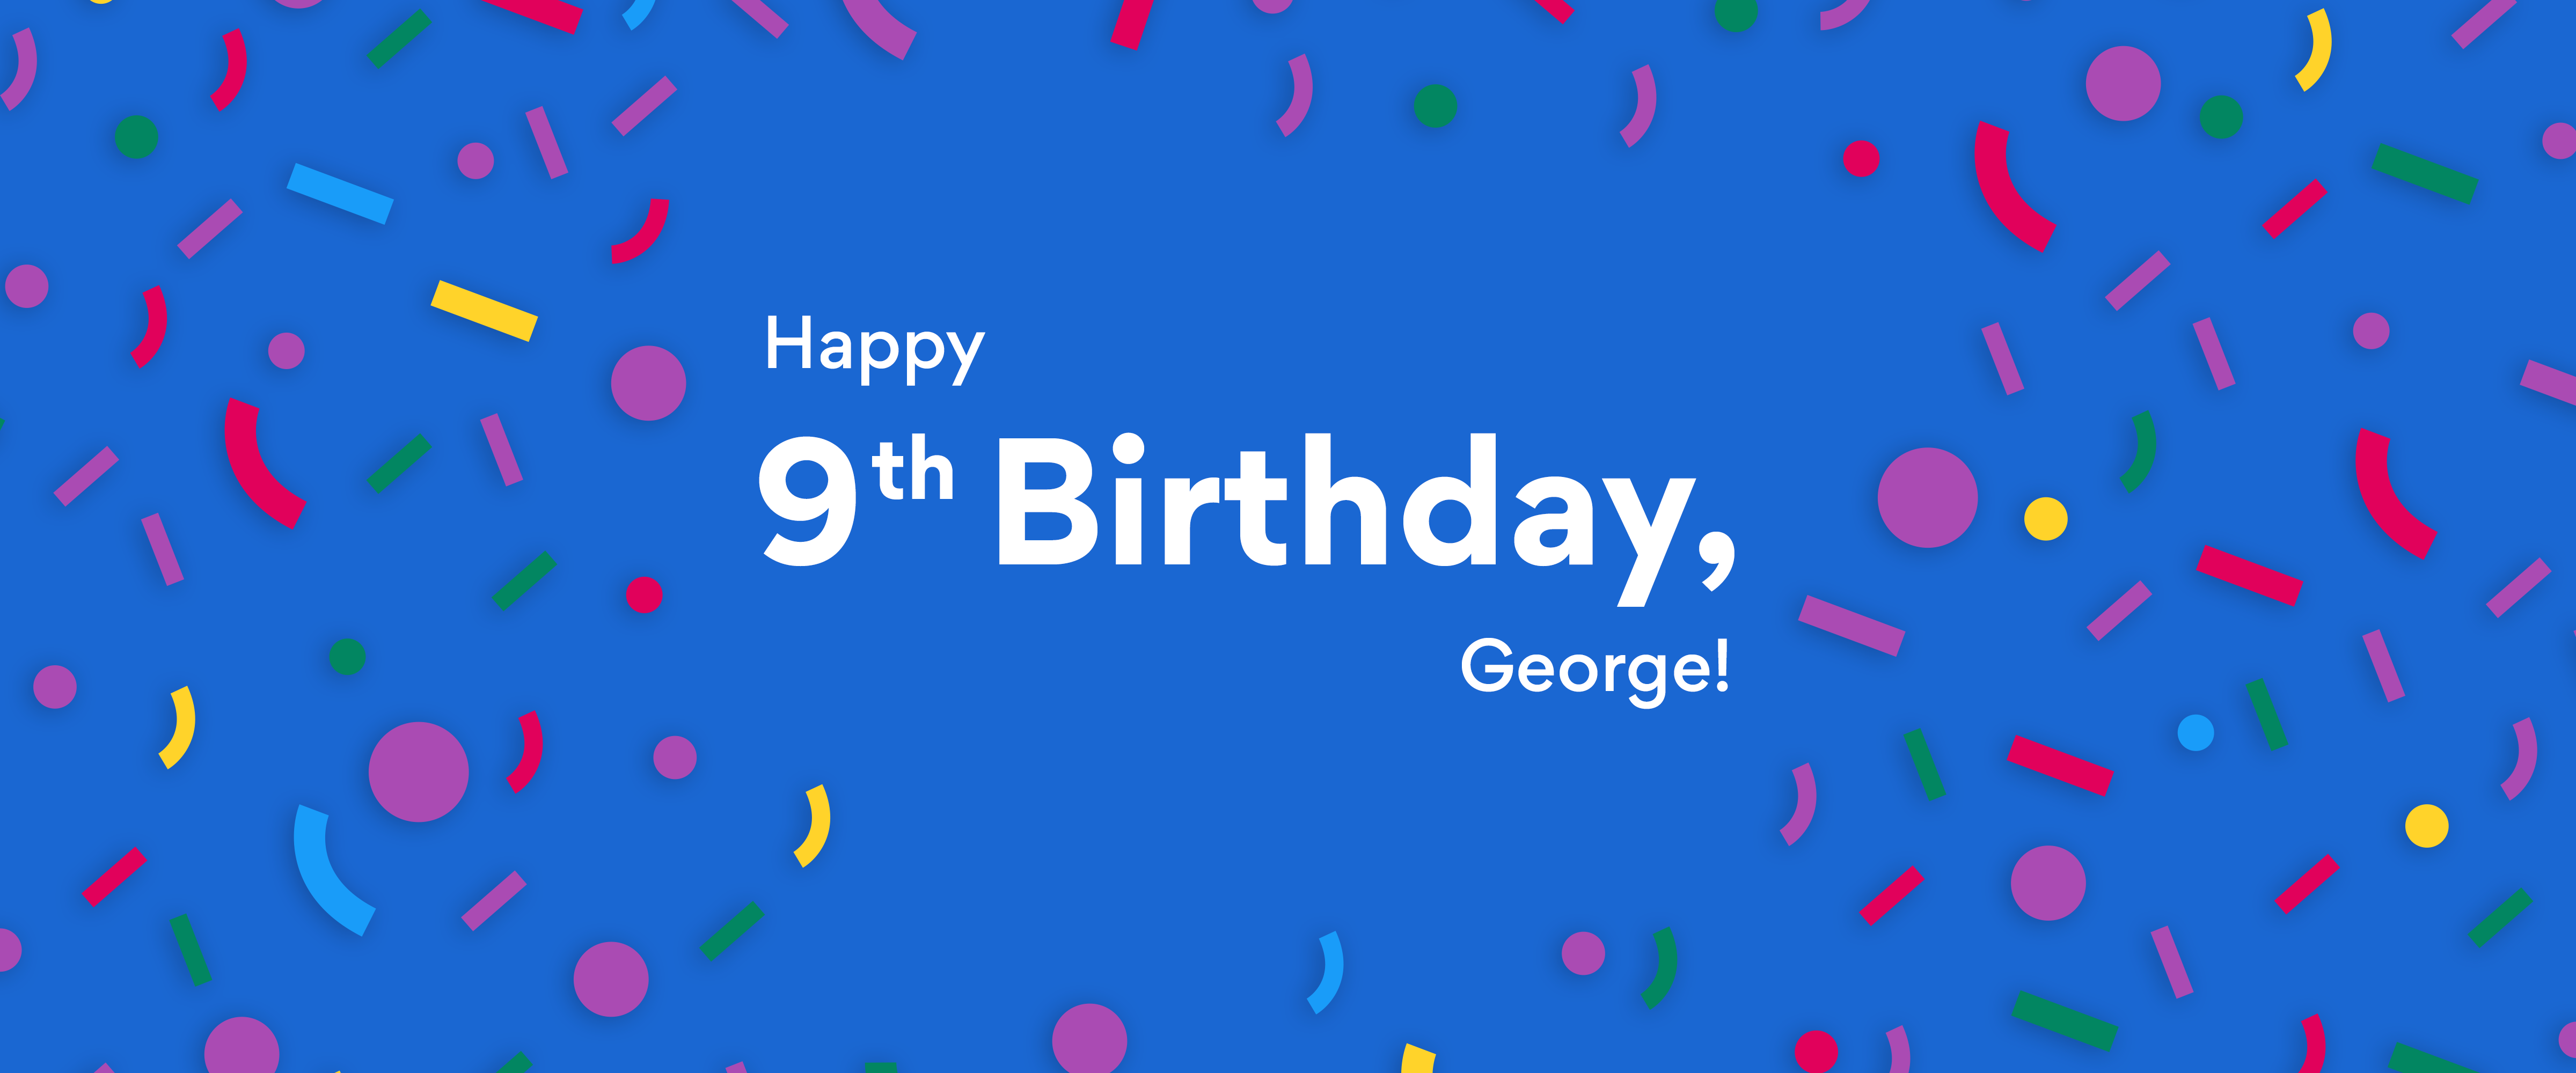 Image saying Happy 9th Birthday George